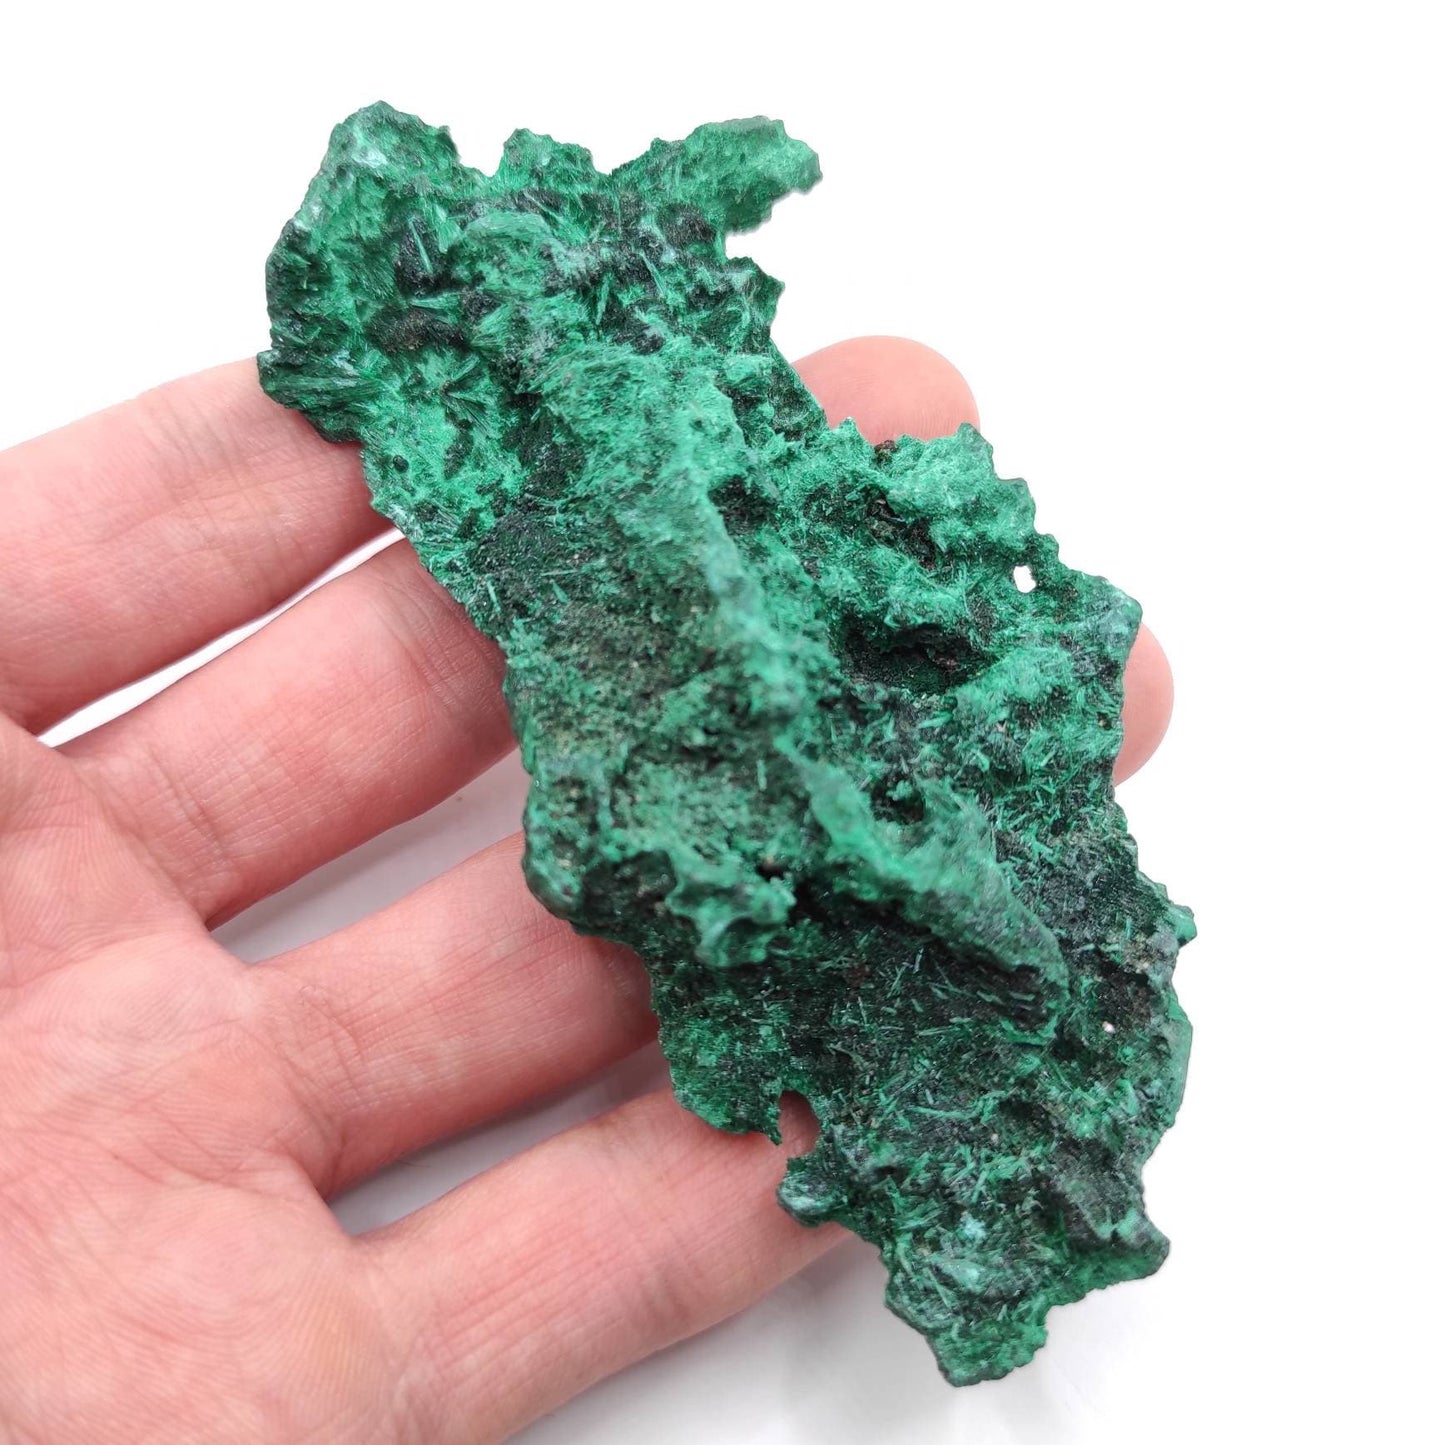 96g Fibrous Malachite - Velvet Malachite from Hubei, China - Natural Malachite Specimen - Raw Minerals - Natural Velvety Malachite Crystal